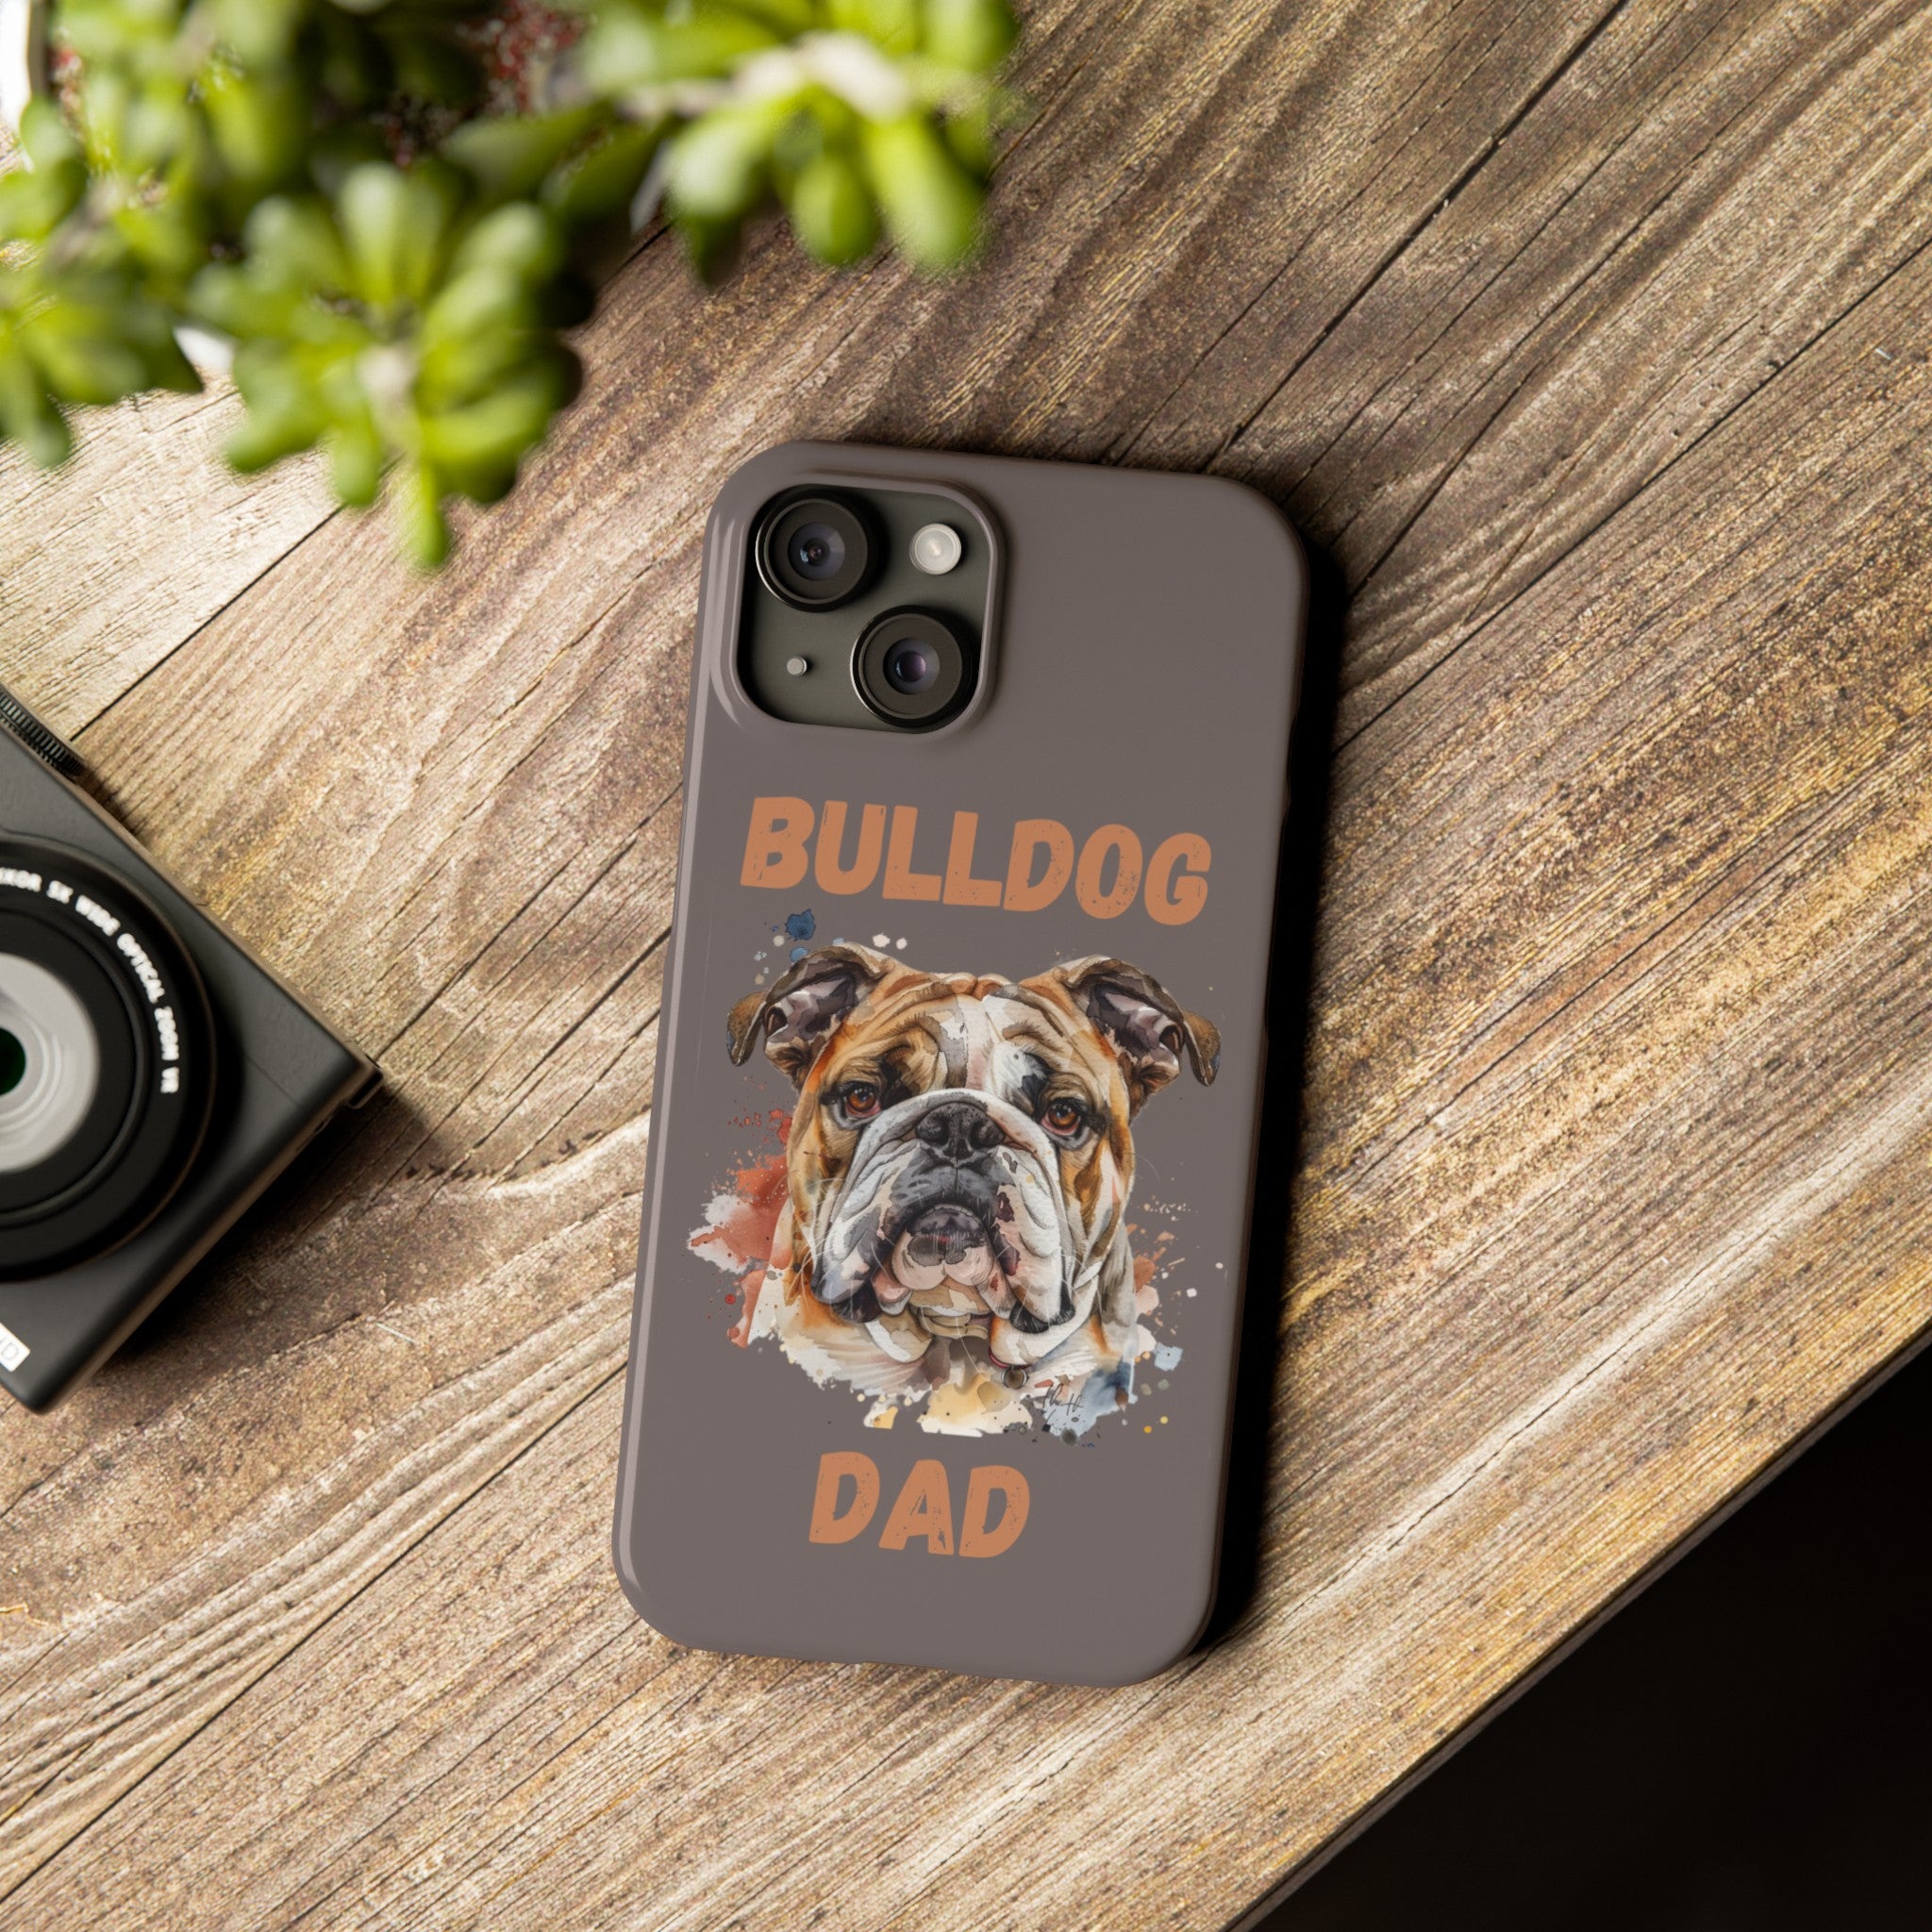 Bulldog Dad iPhone Cases (English/Watercolor)